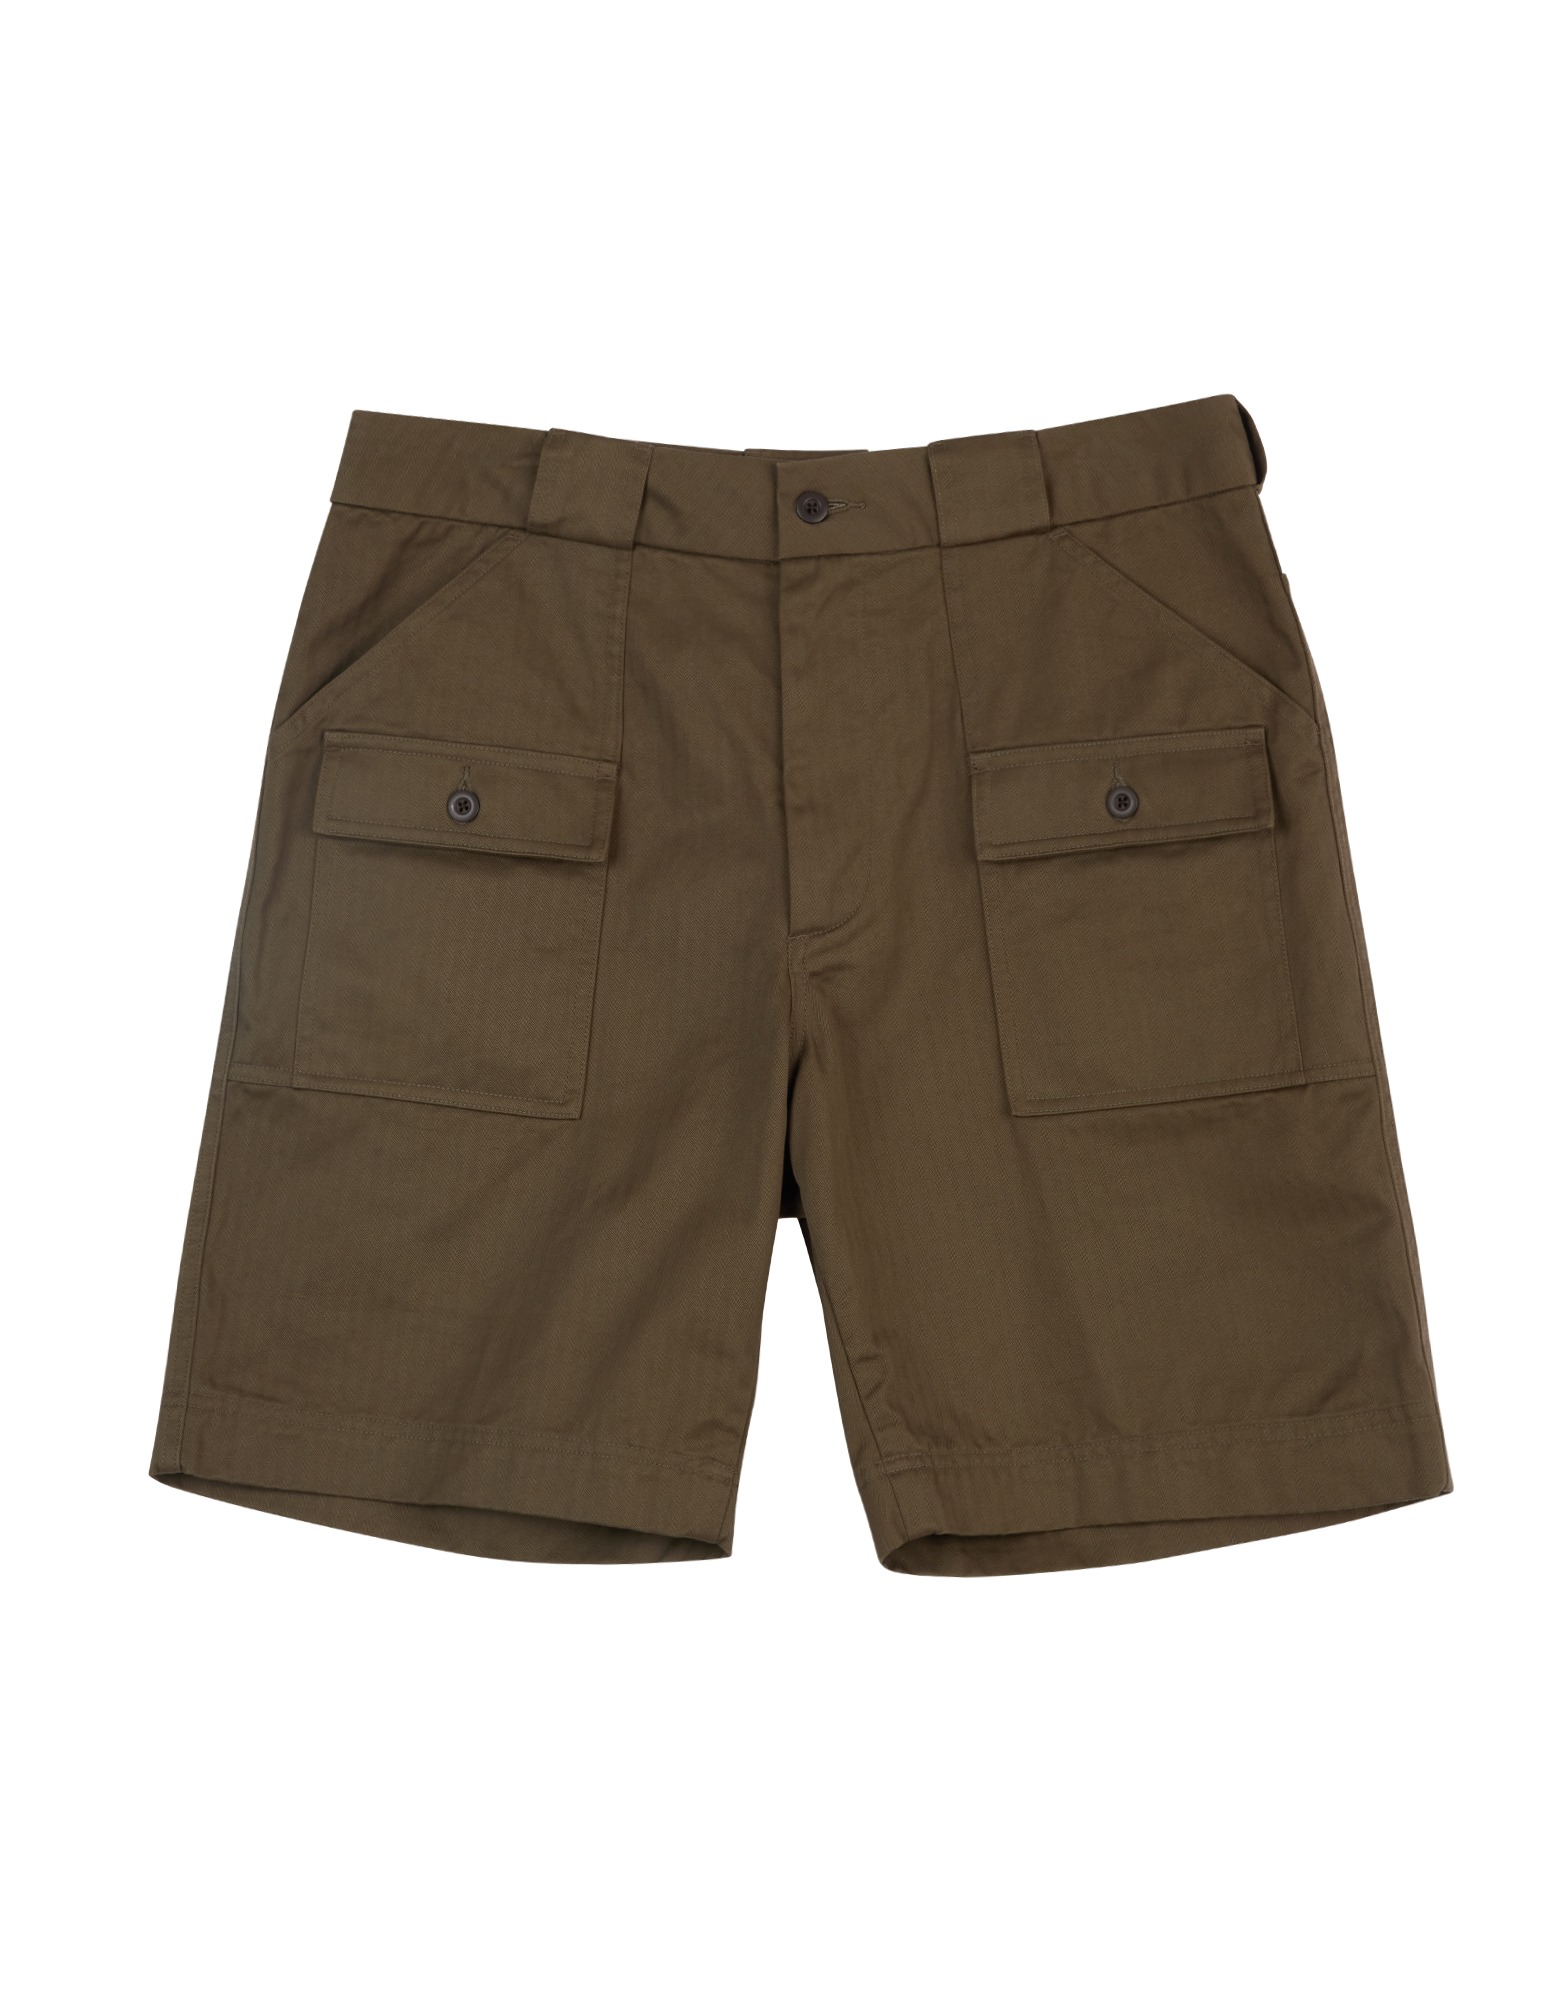 LSC Bush Shorts (Olive)